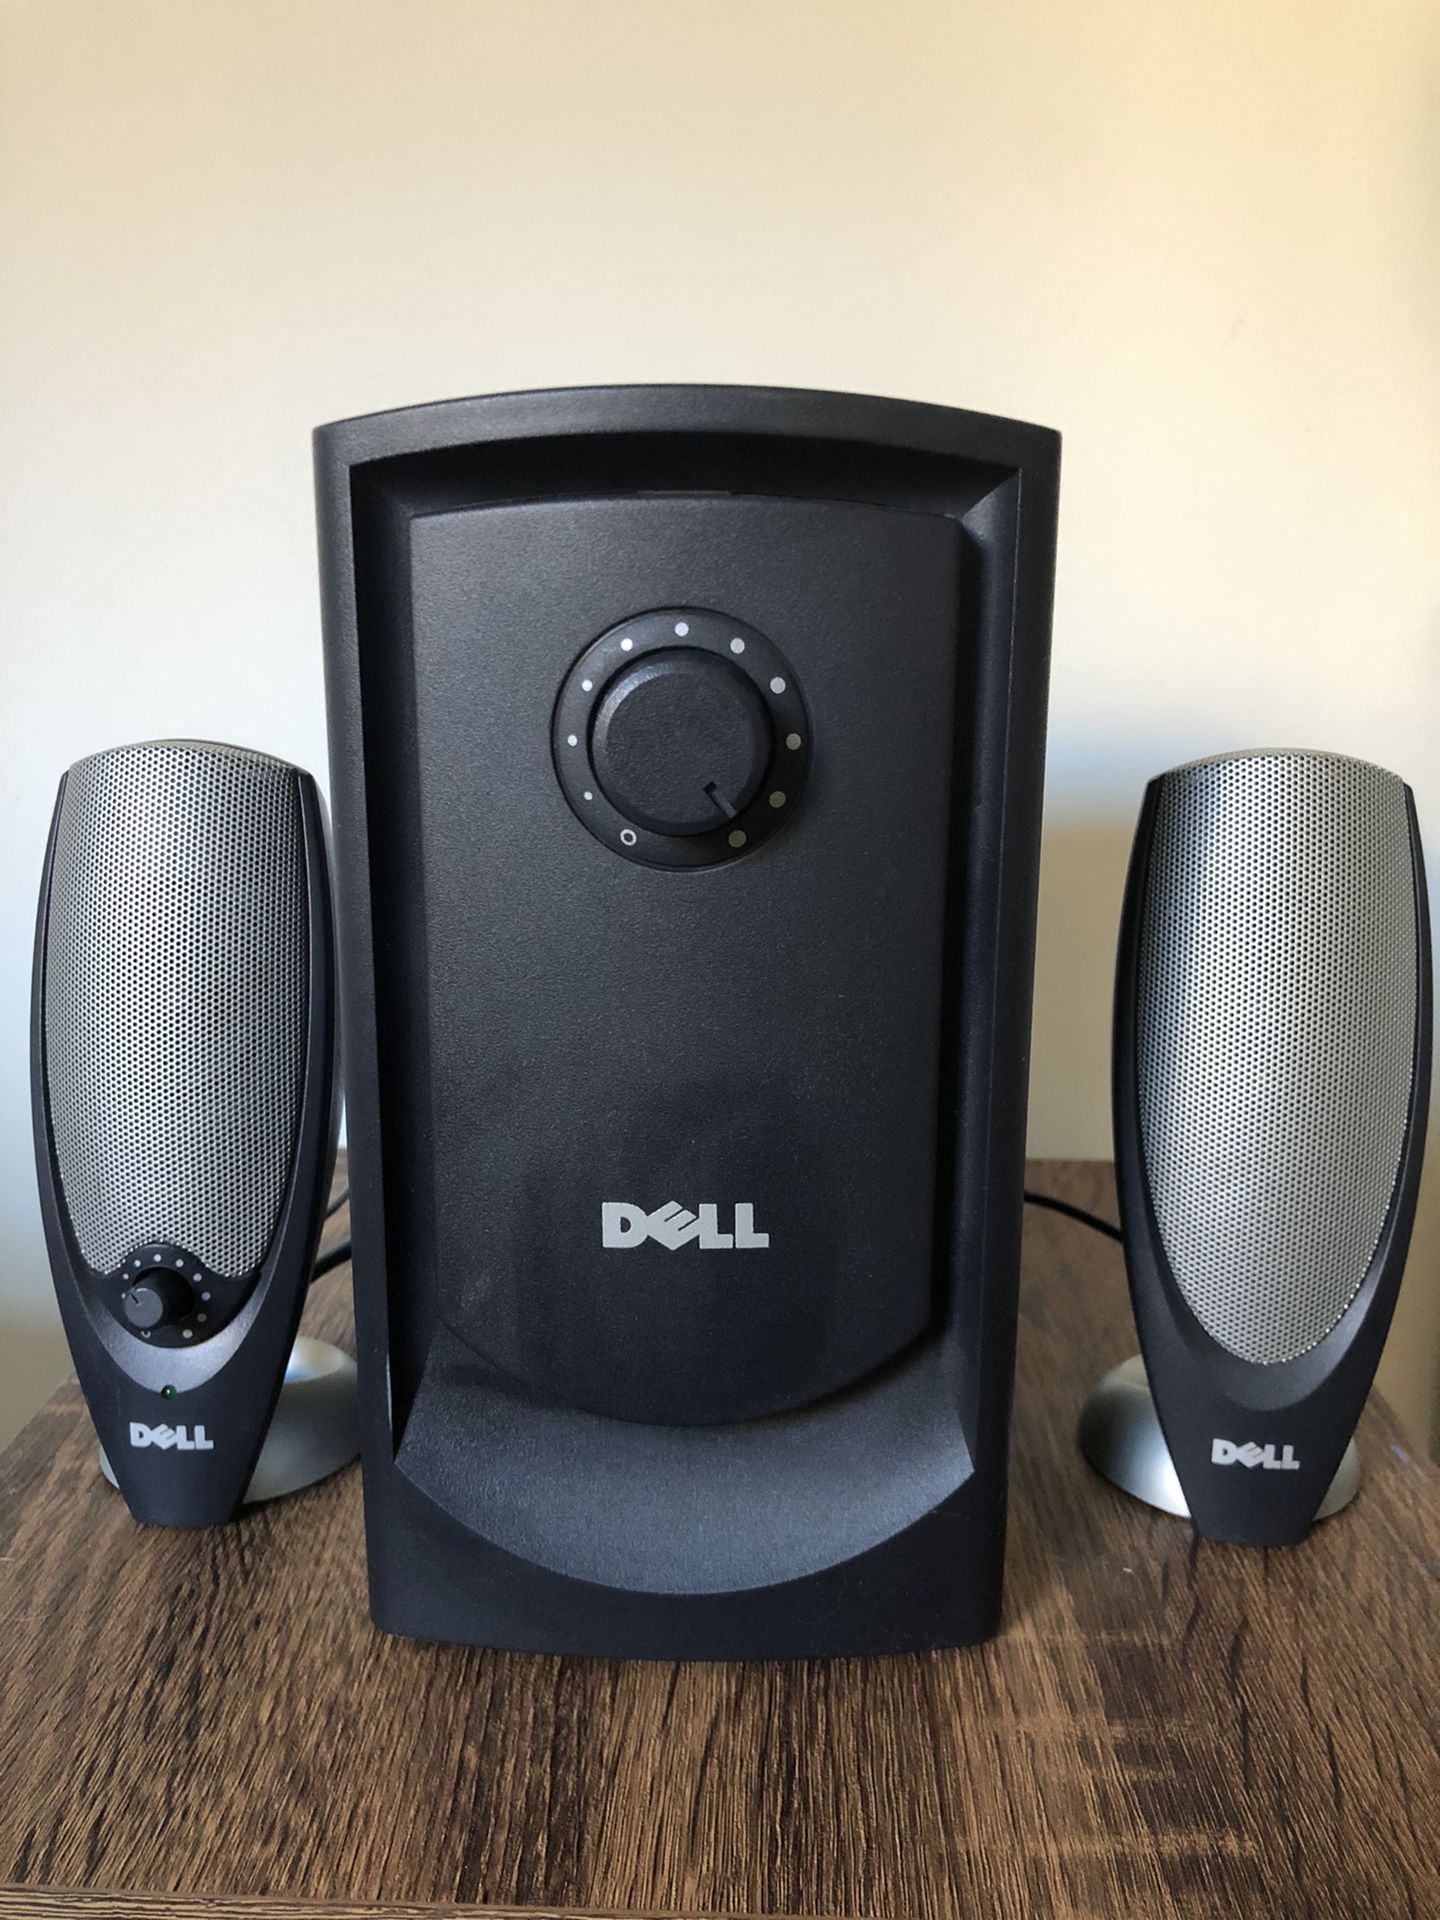 Speaker - Dell Zylux A425 Multimédia Computer Speaker System - Powered Woofer & 2 Speakers